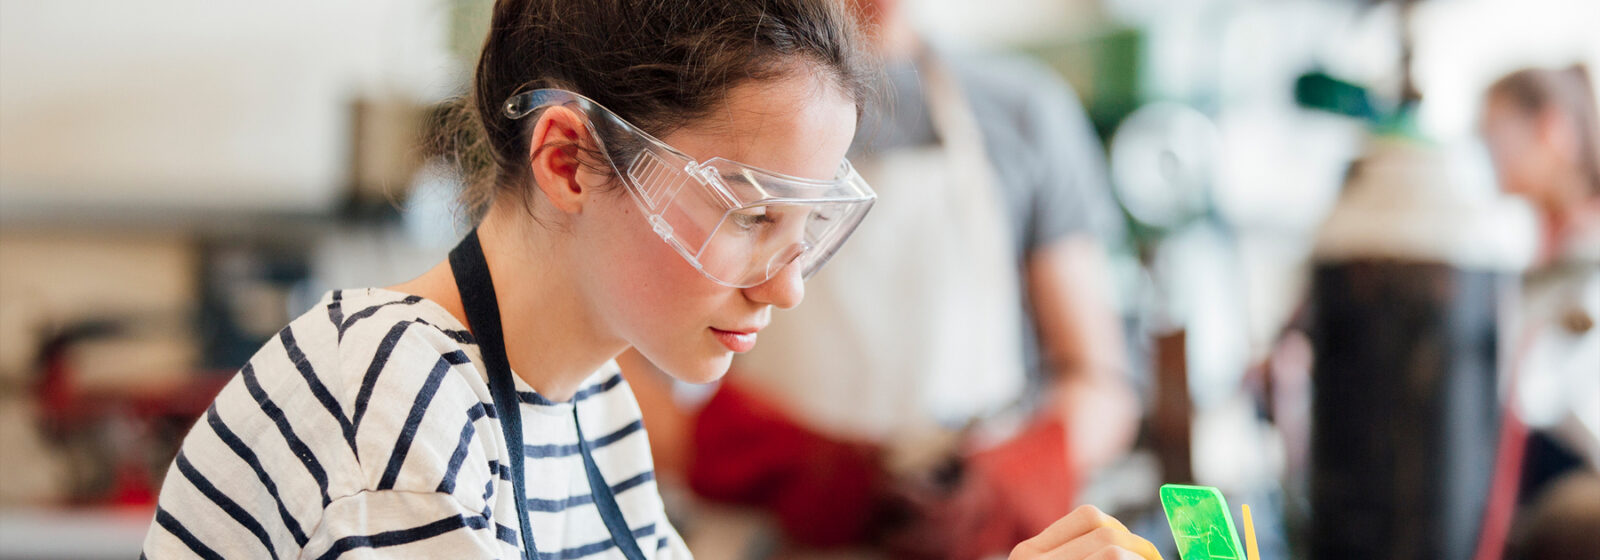 Girl wearing safety glasses doing soldering